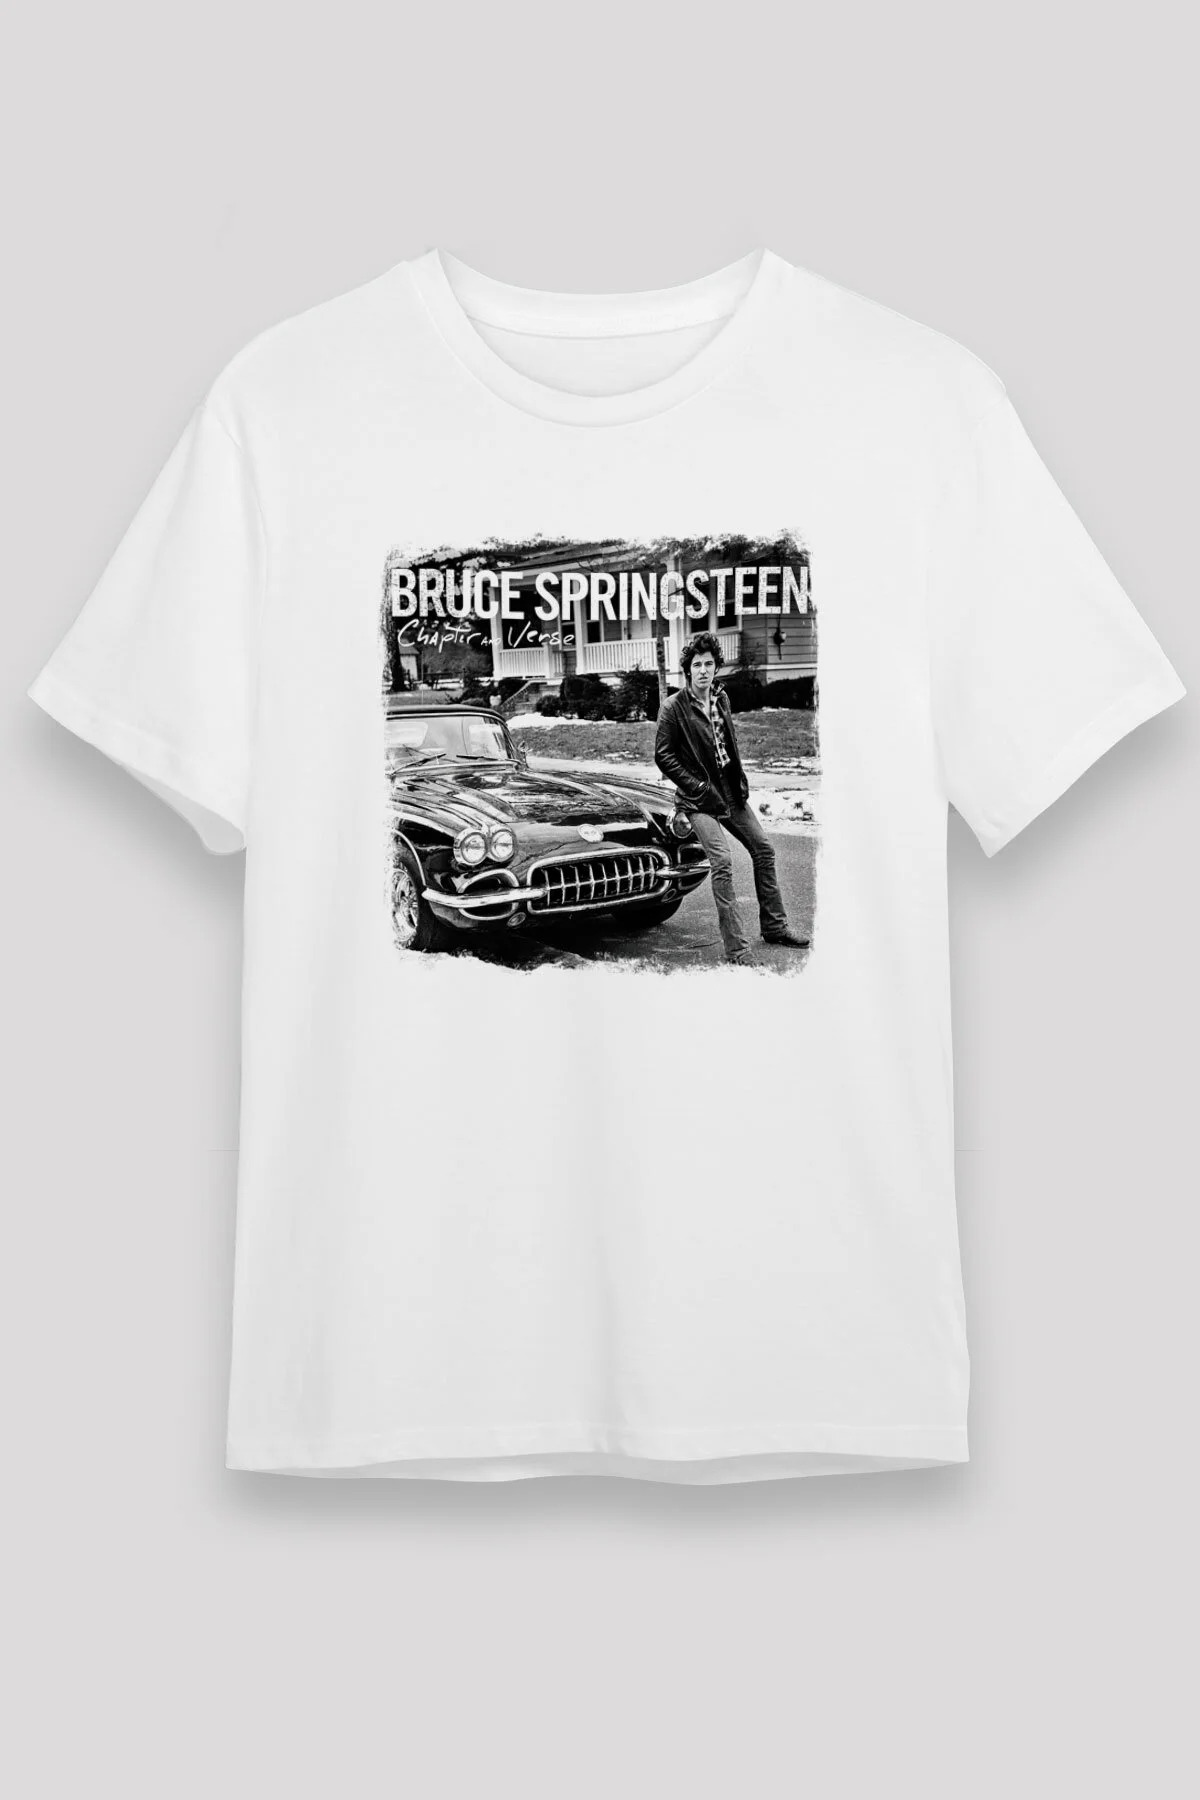 Bruce Springsteen ,Rock Music Band ,Unisex Tshirt 05/